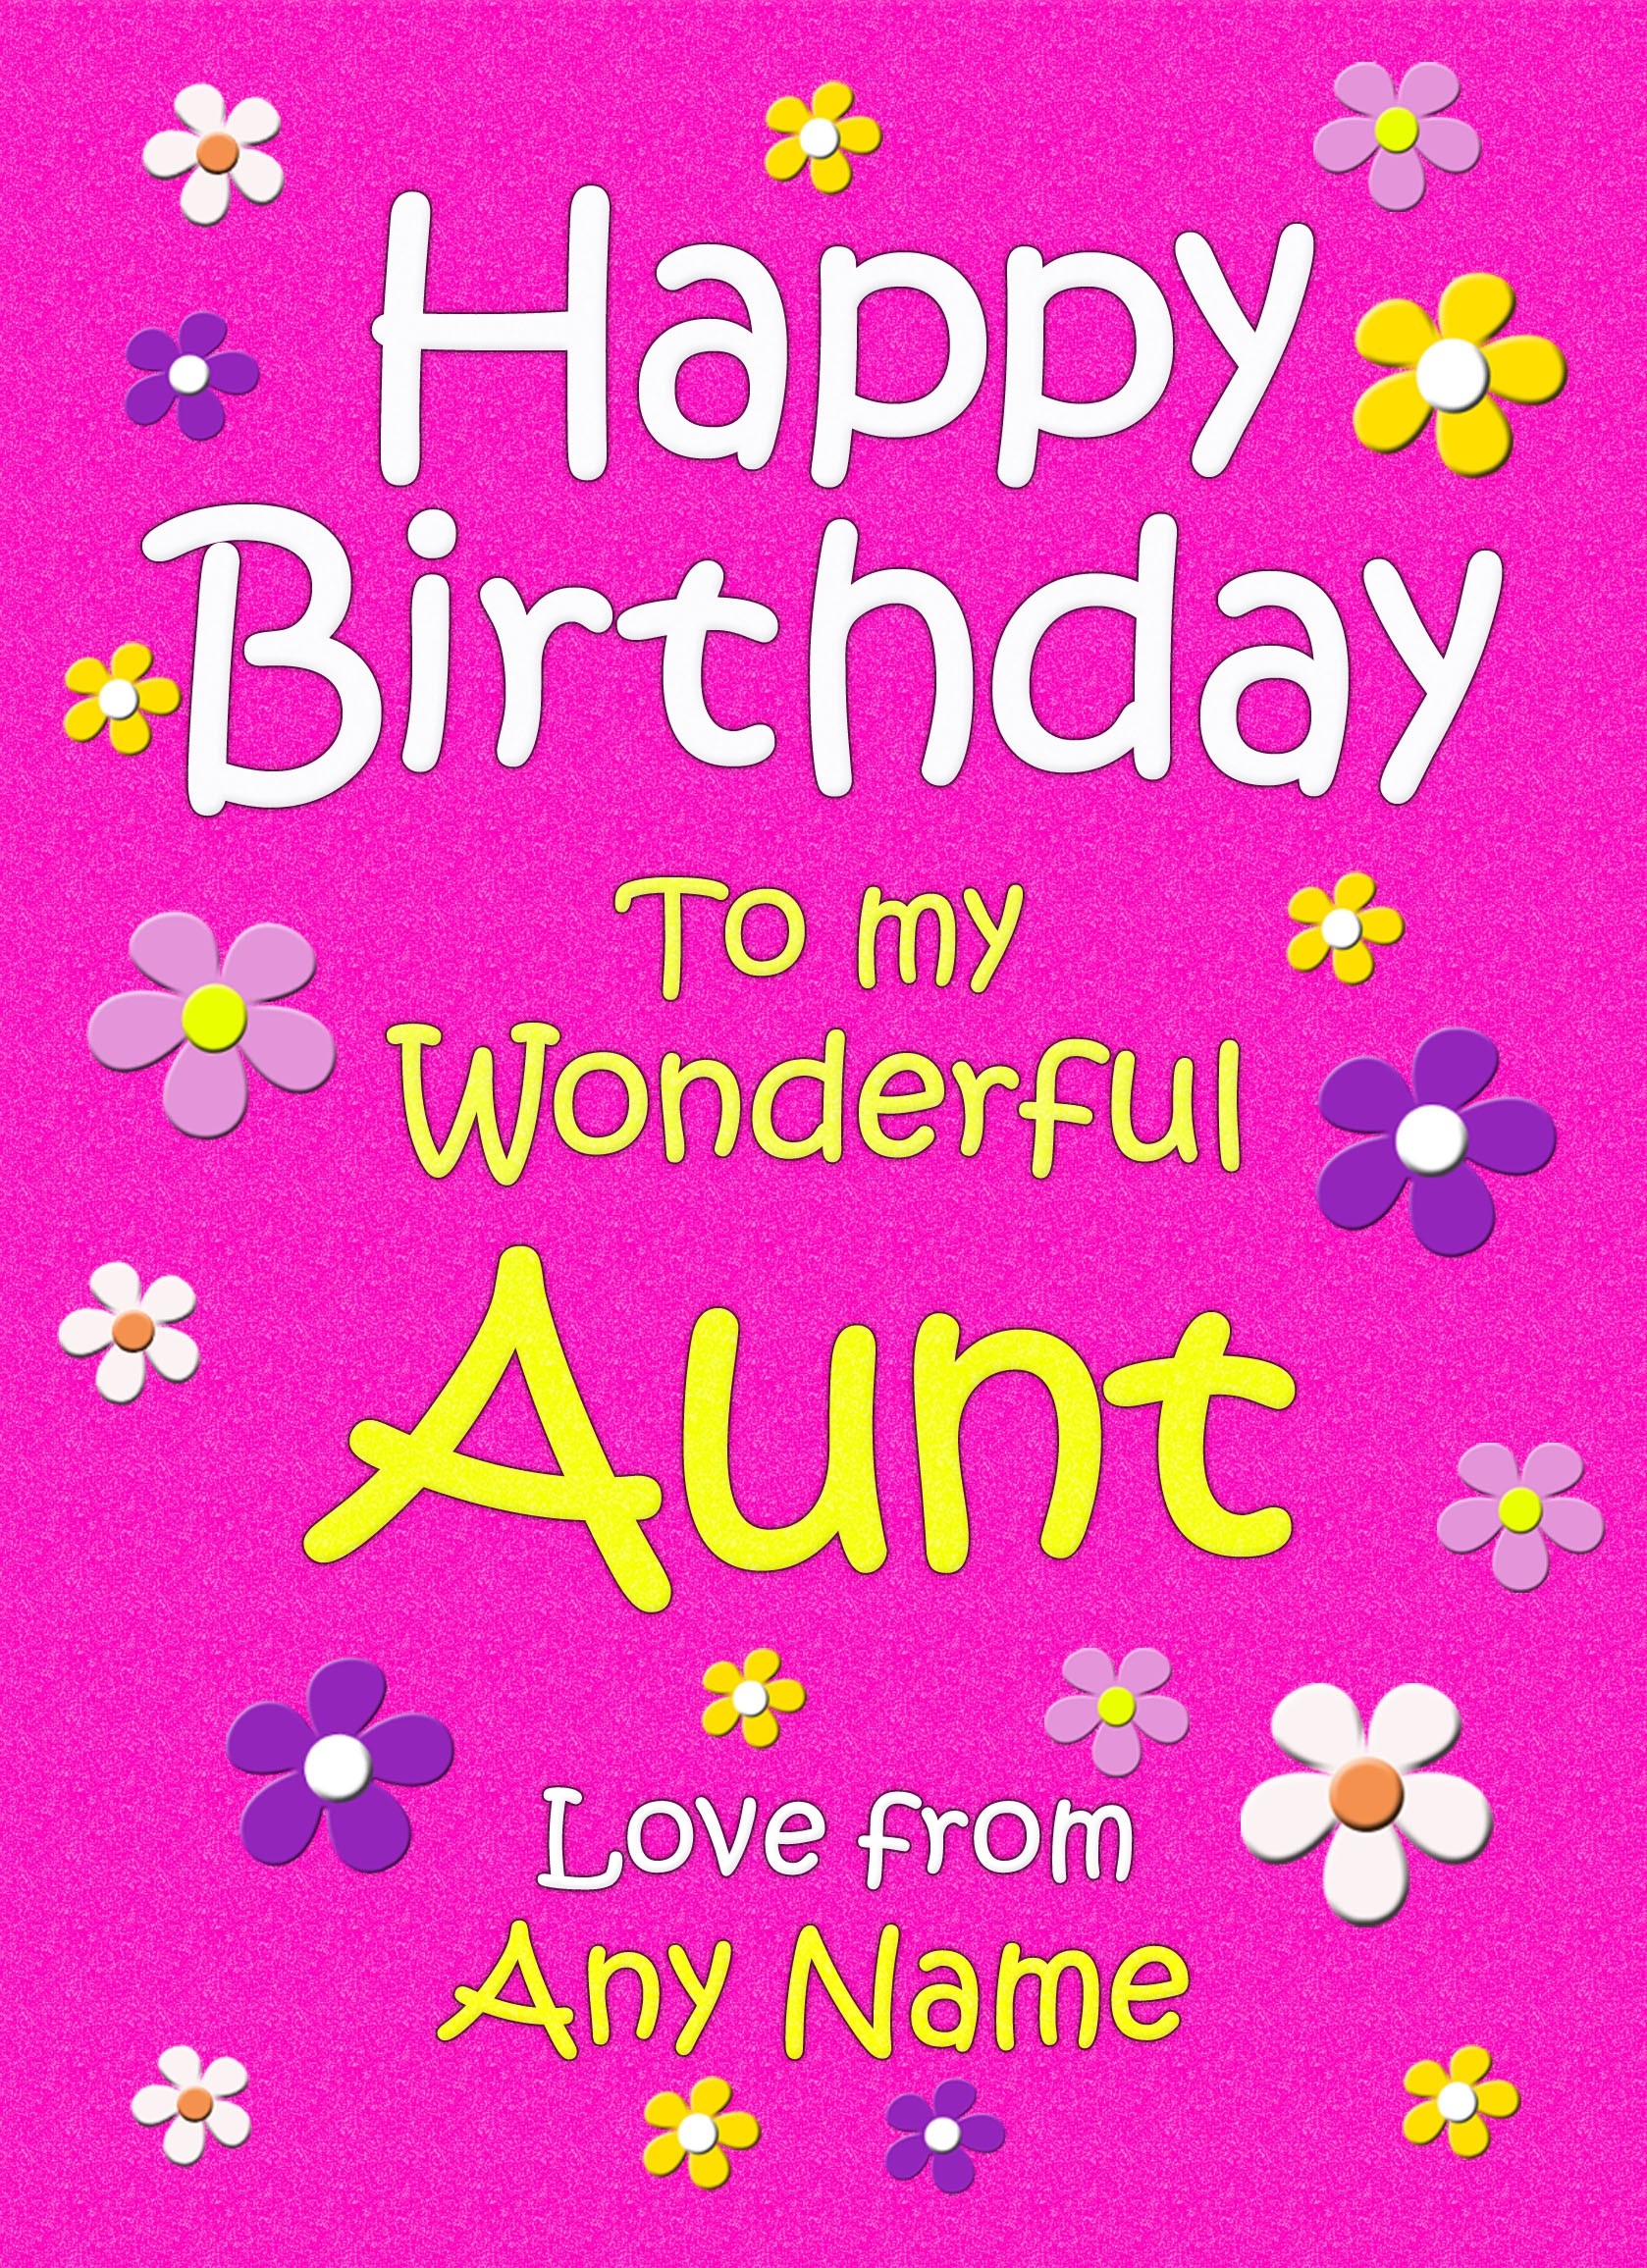 Personalised Aunt Birthday Card (Cerise)